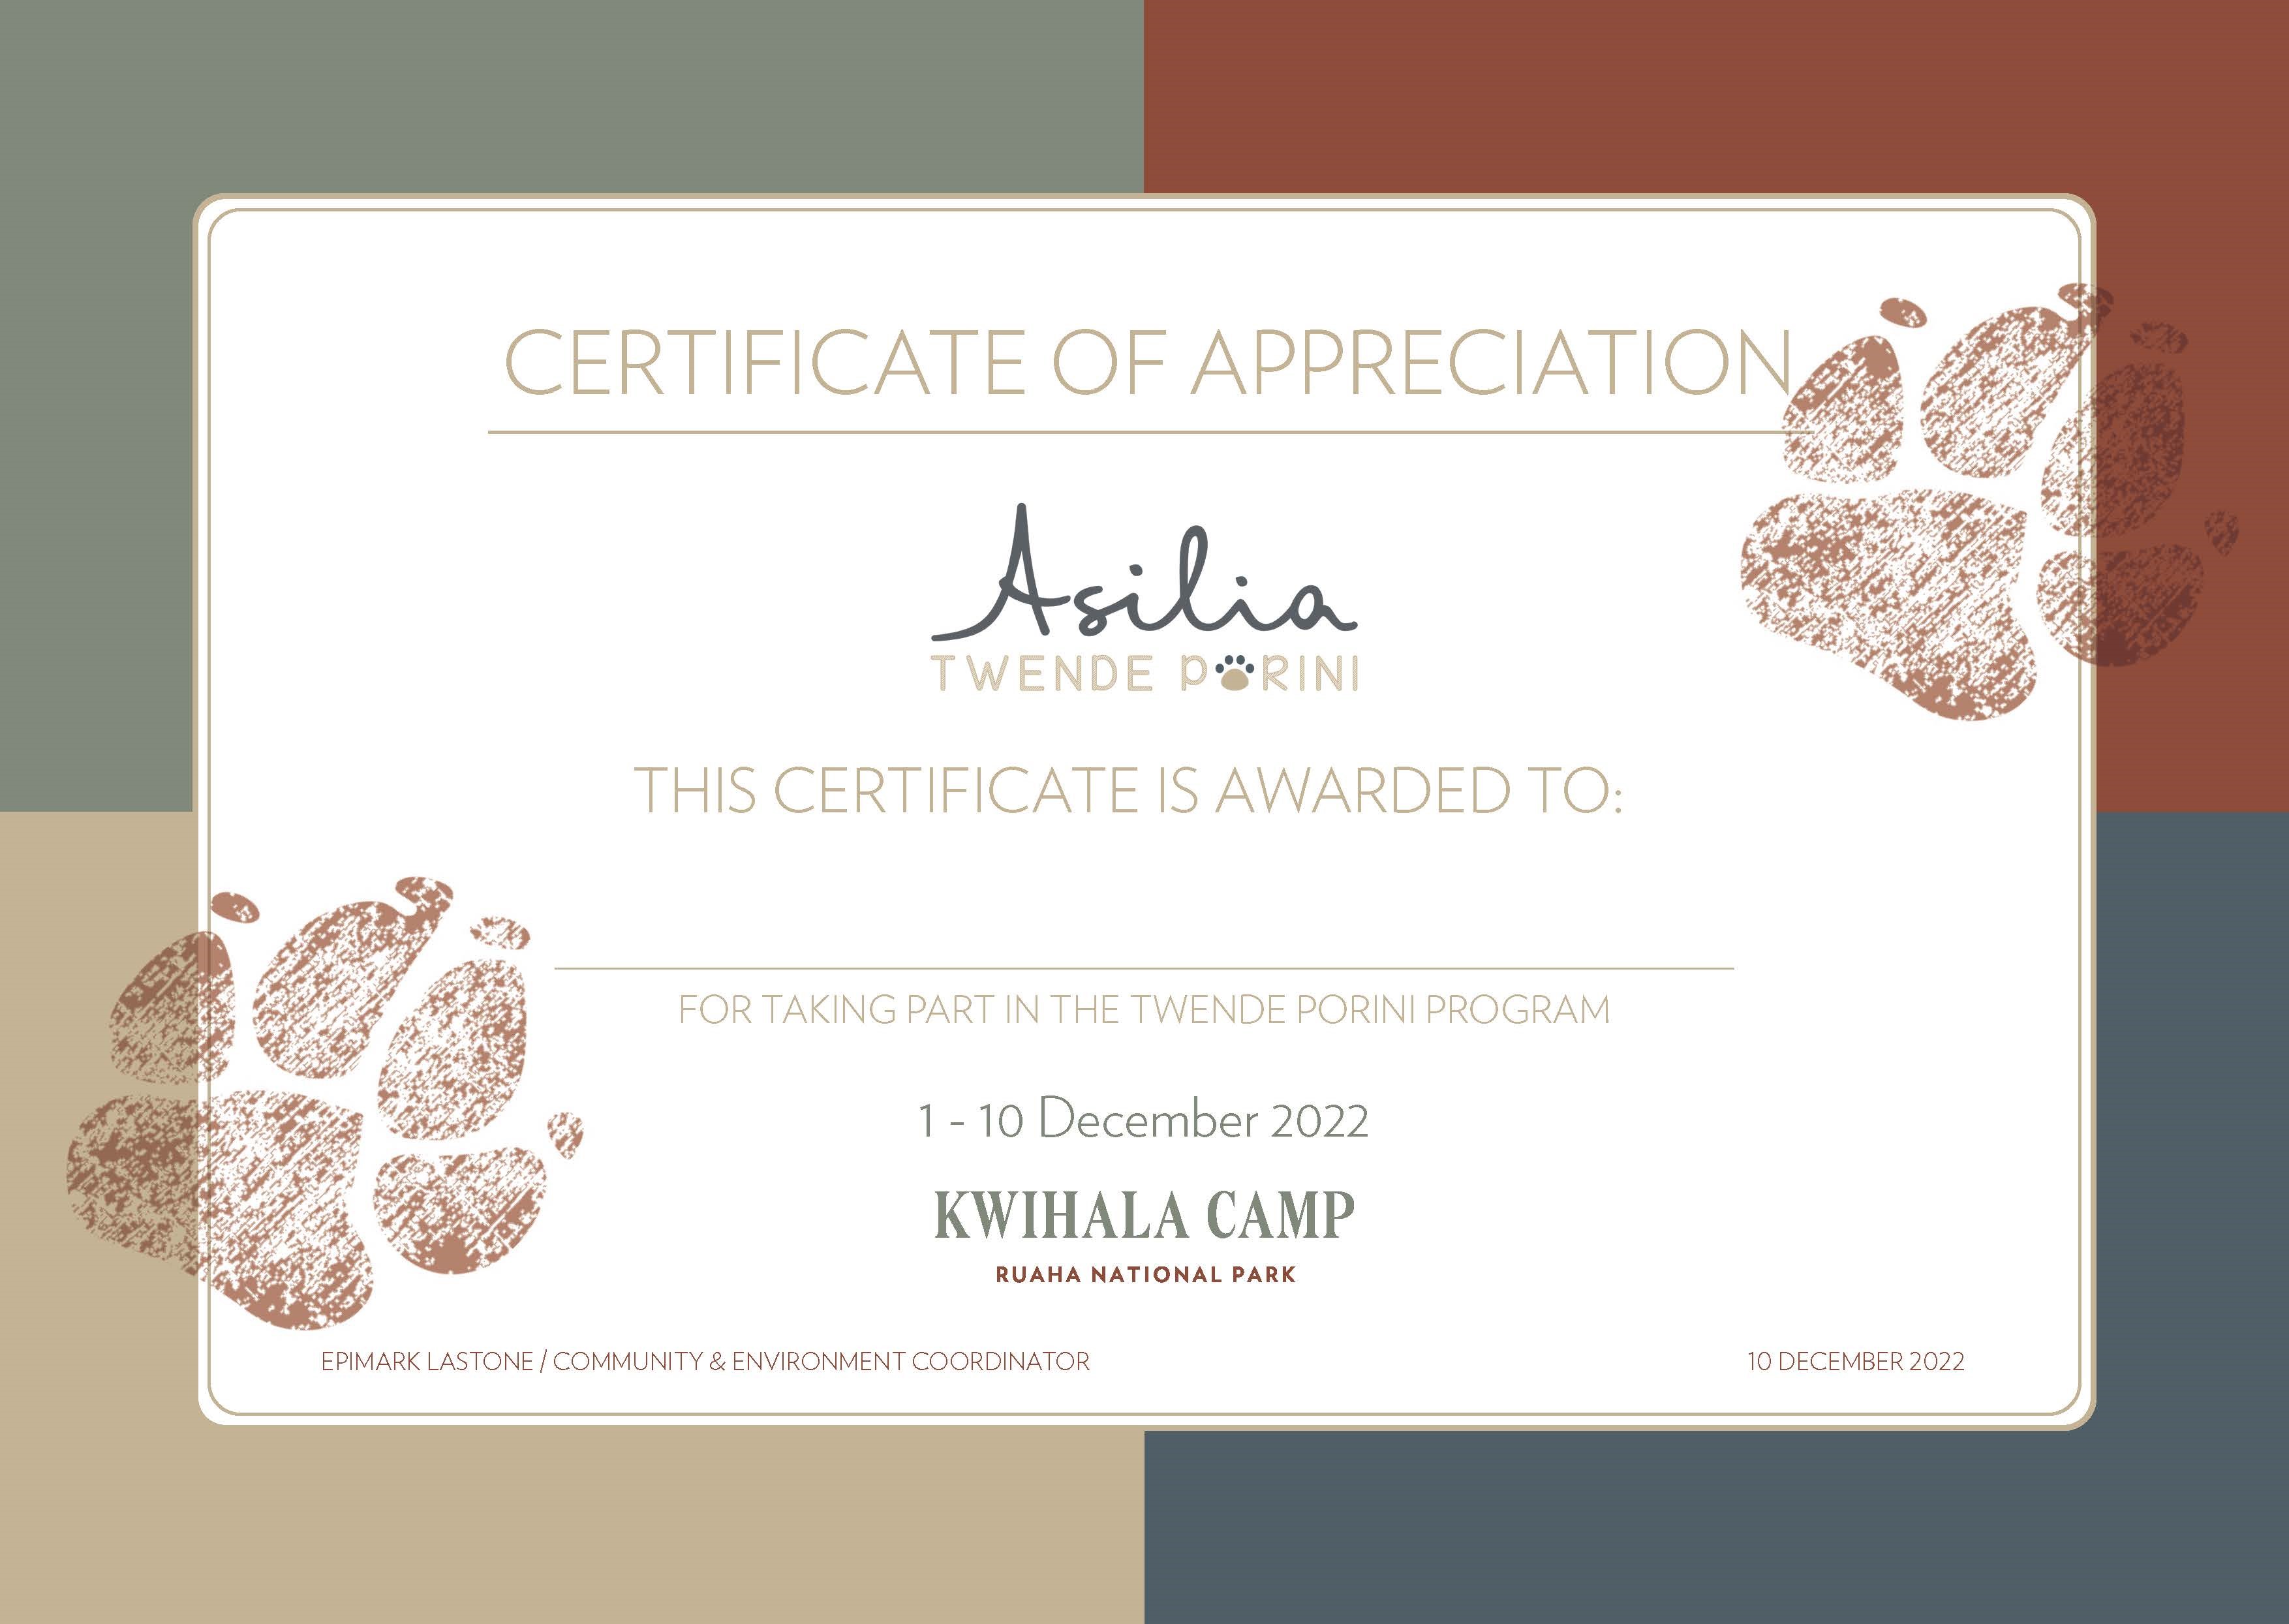 A copy of the certificate of appreciation each Twende Porini child receives.